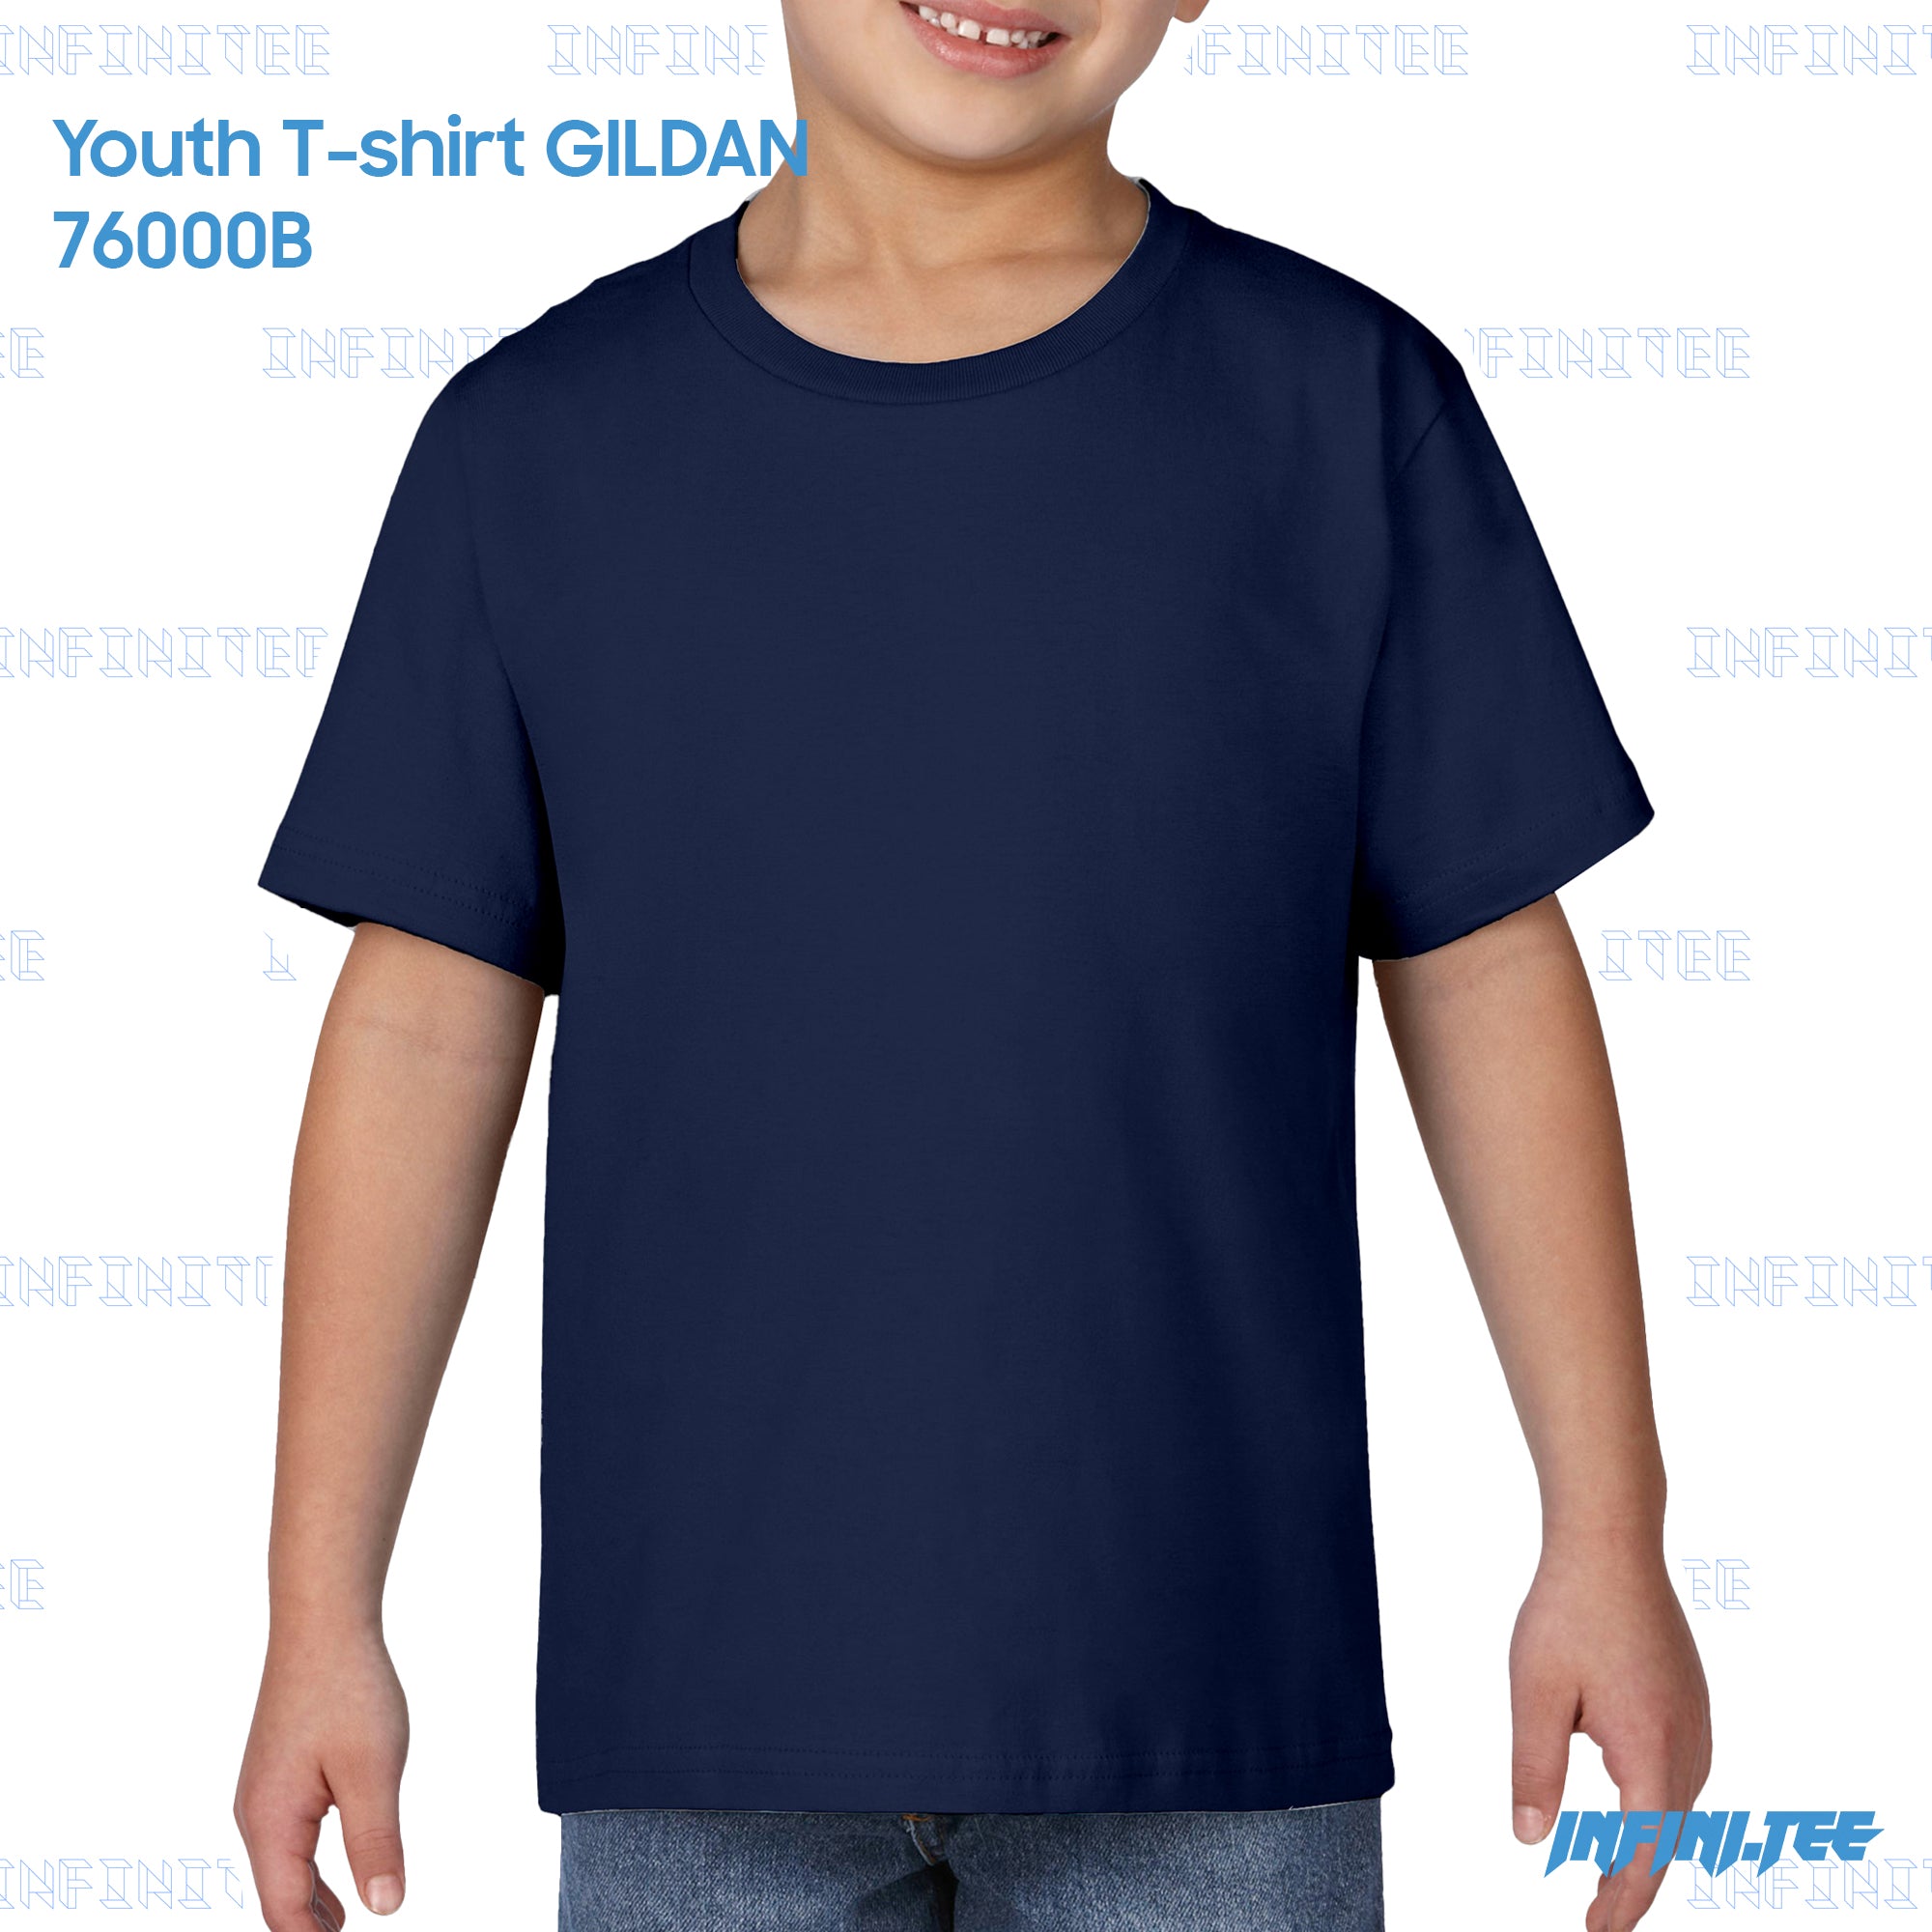 Youth T-shirt 76000B GILDAN - NAVY